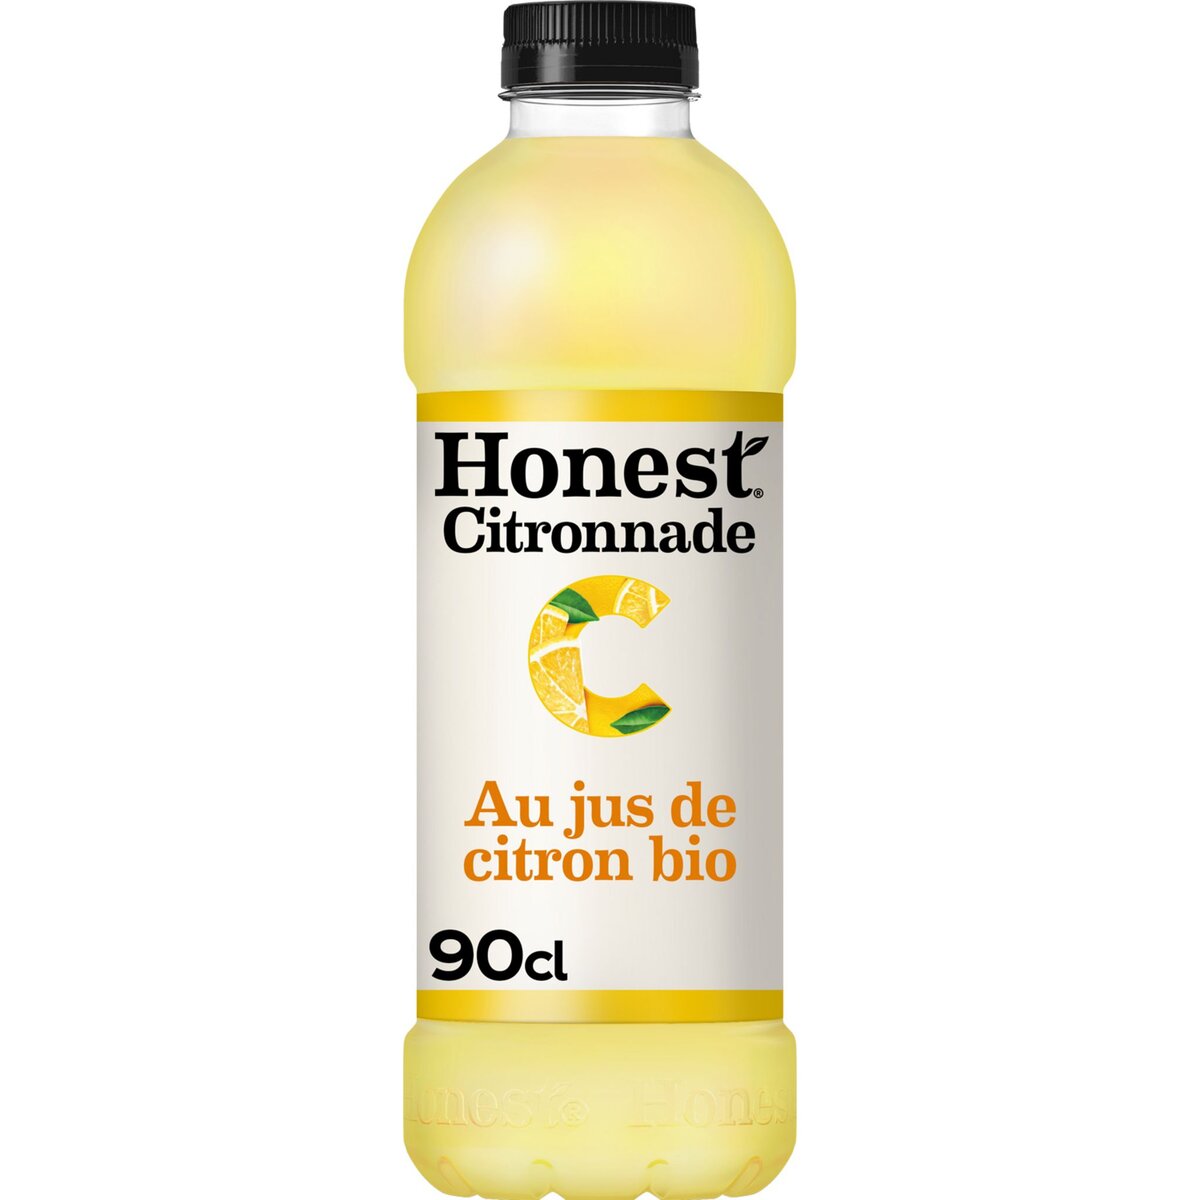 HONEST Citronnade bio 90cl